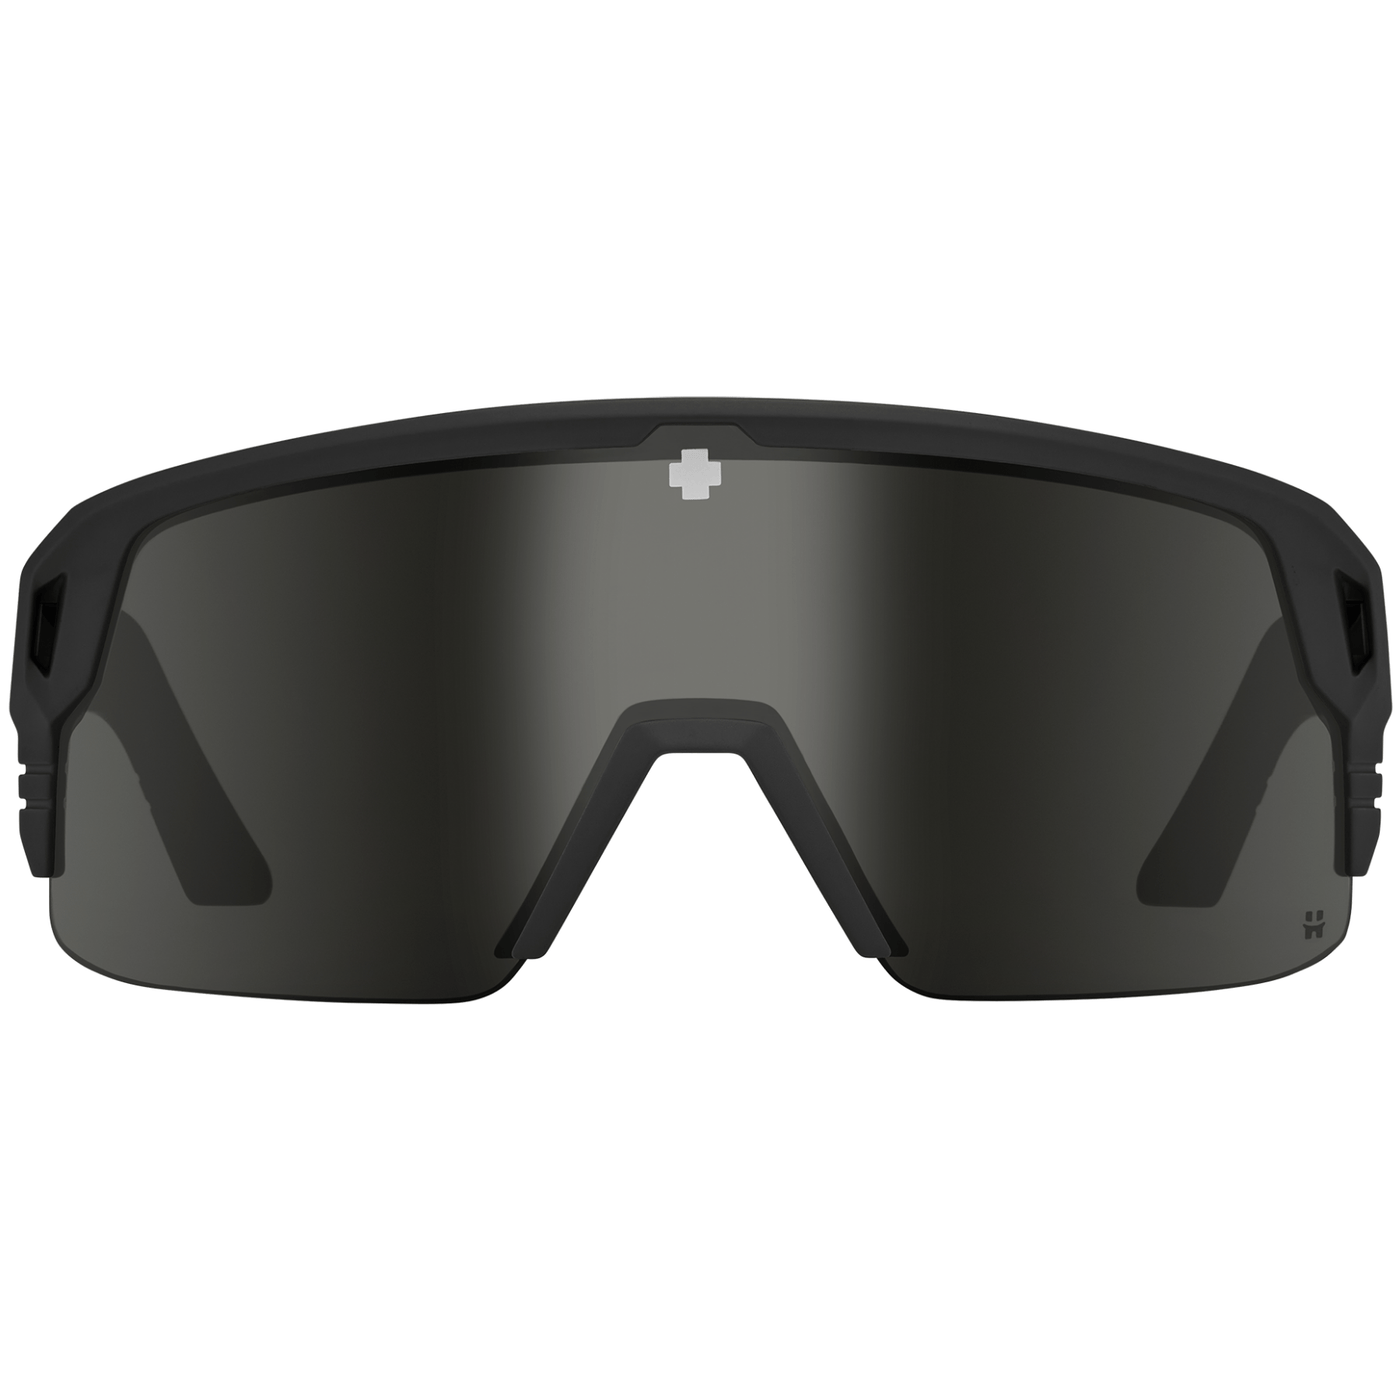 SPY MONOLITH 5050 Sunglasses, Happy Lens - Black 8Lines Shop - Fast Shipping